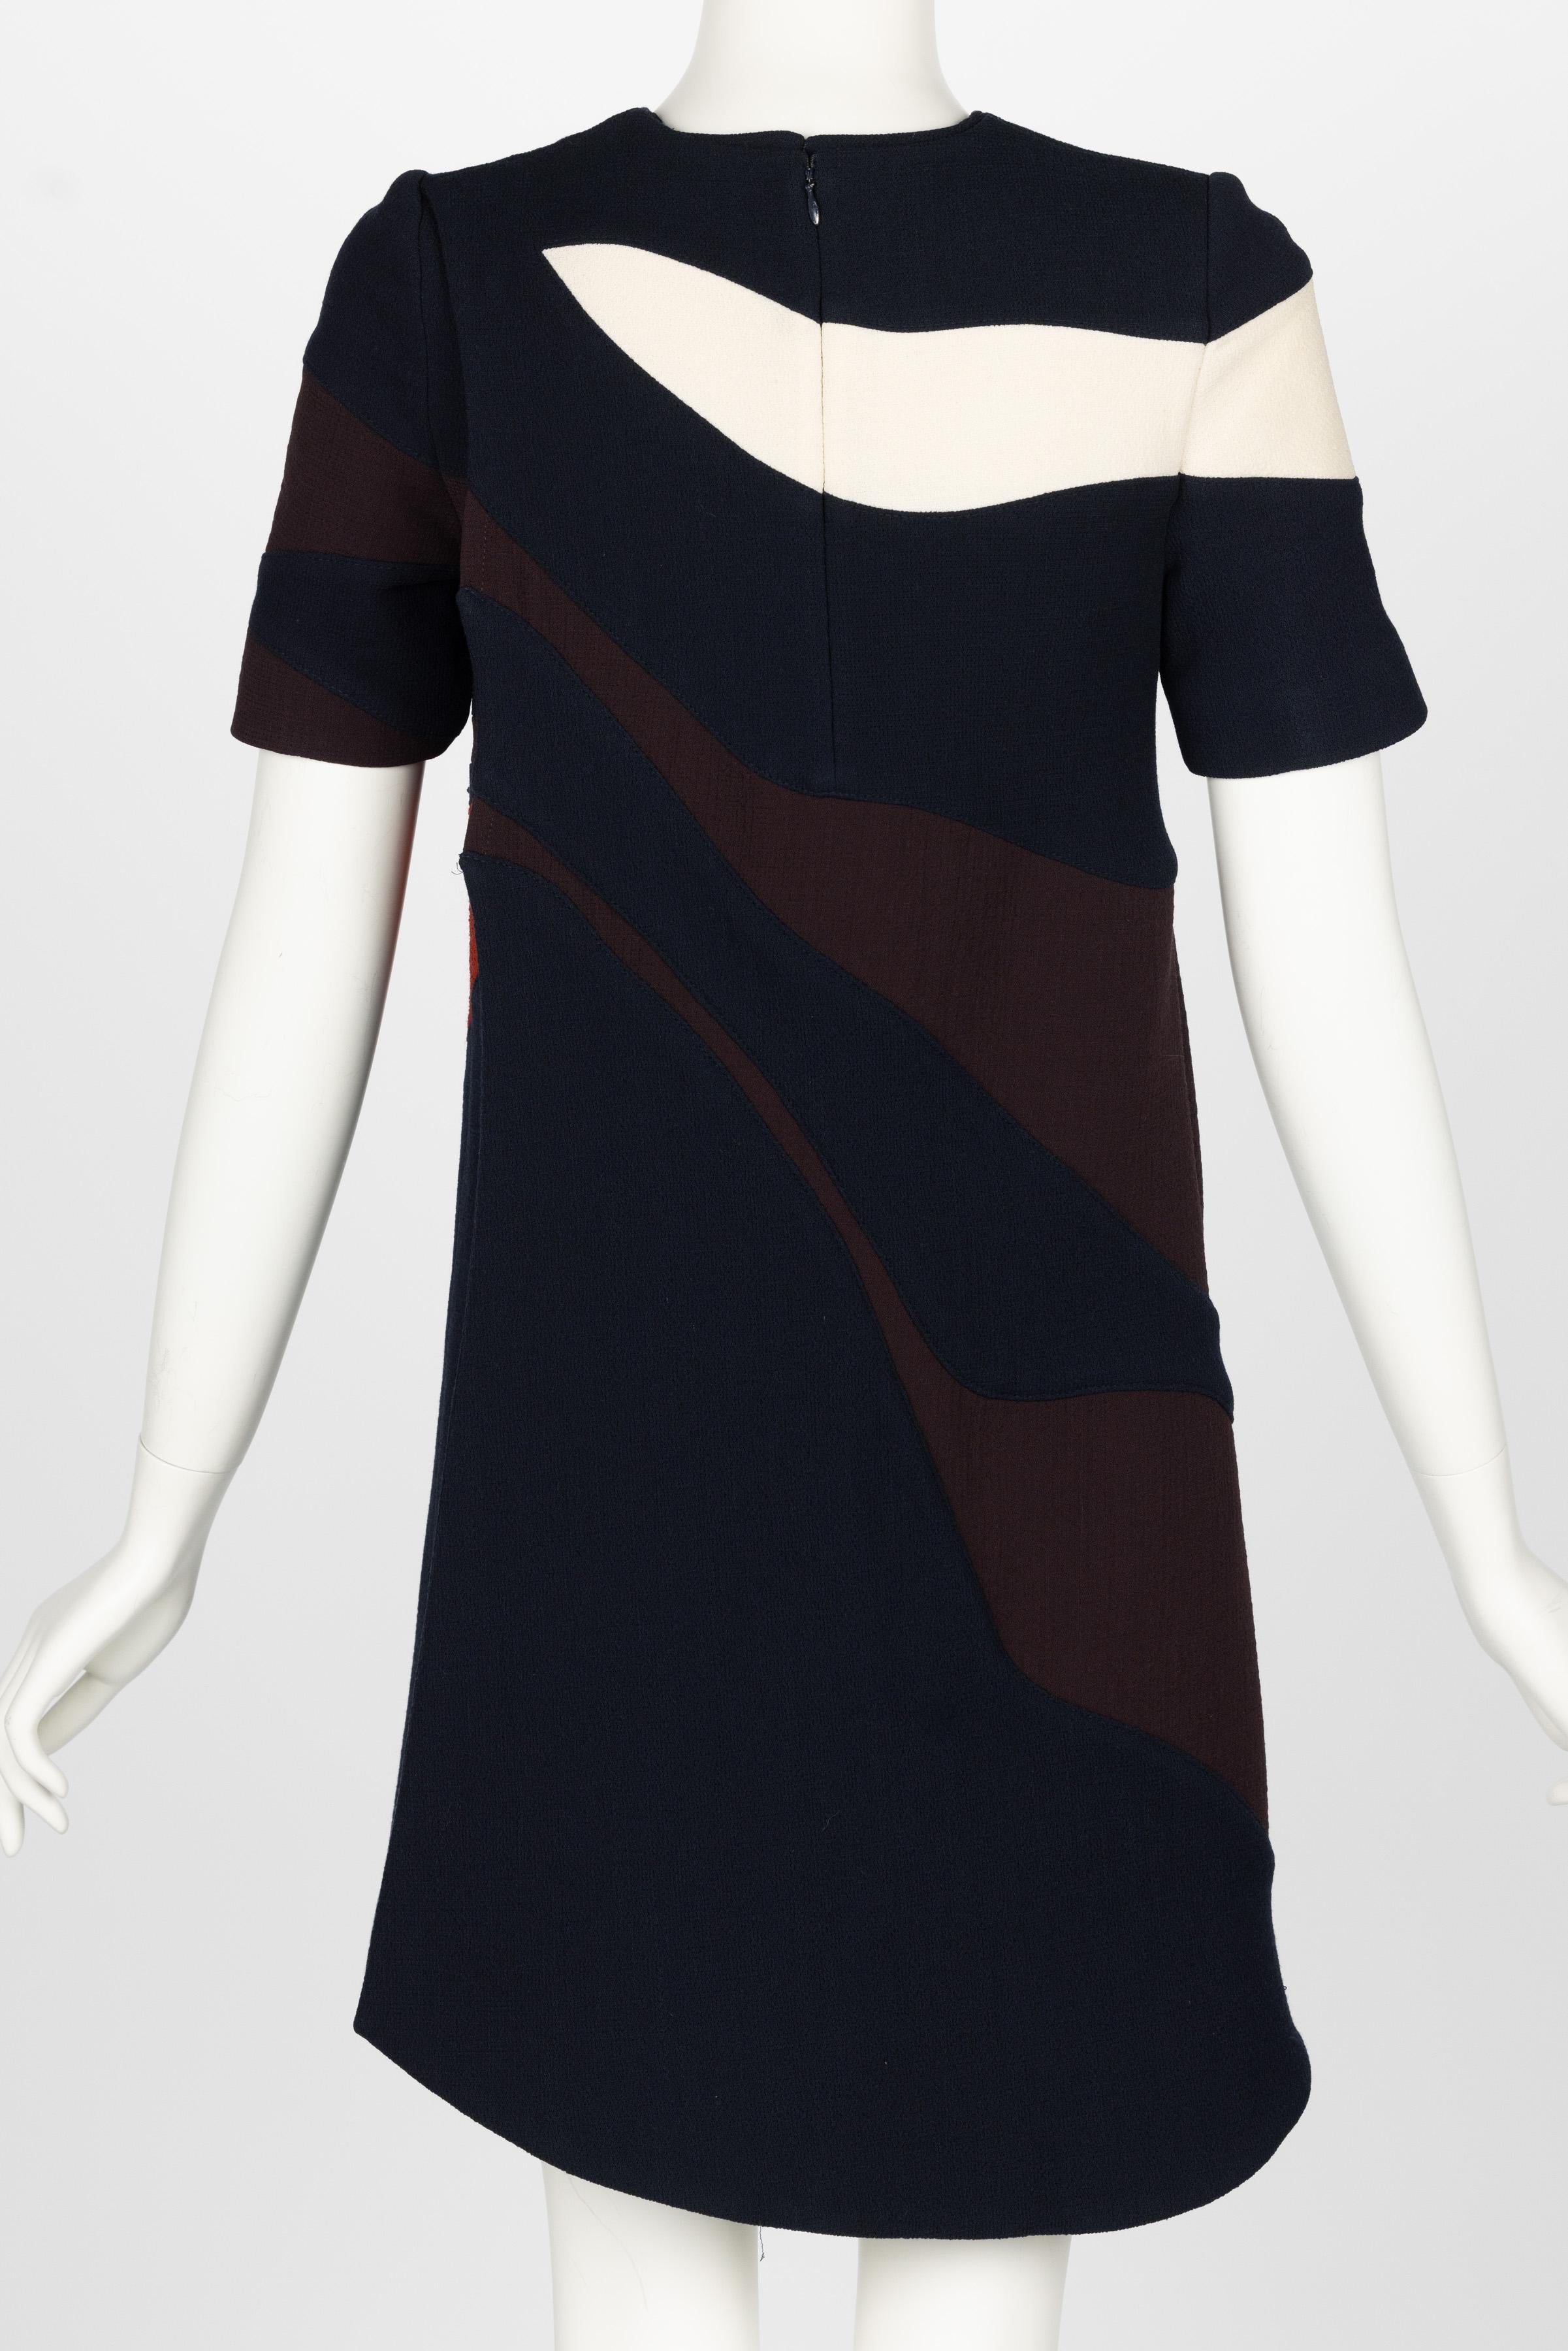 Christian Dior Raf Simmons Abstract Stripe Dress Runway Fall 2015  5